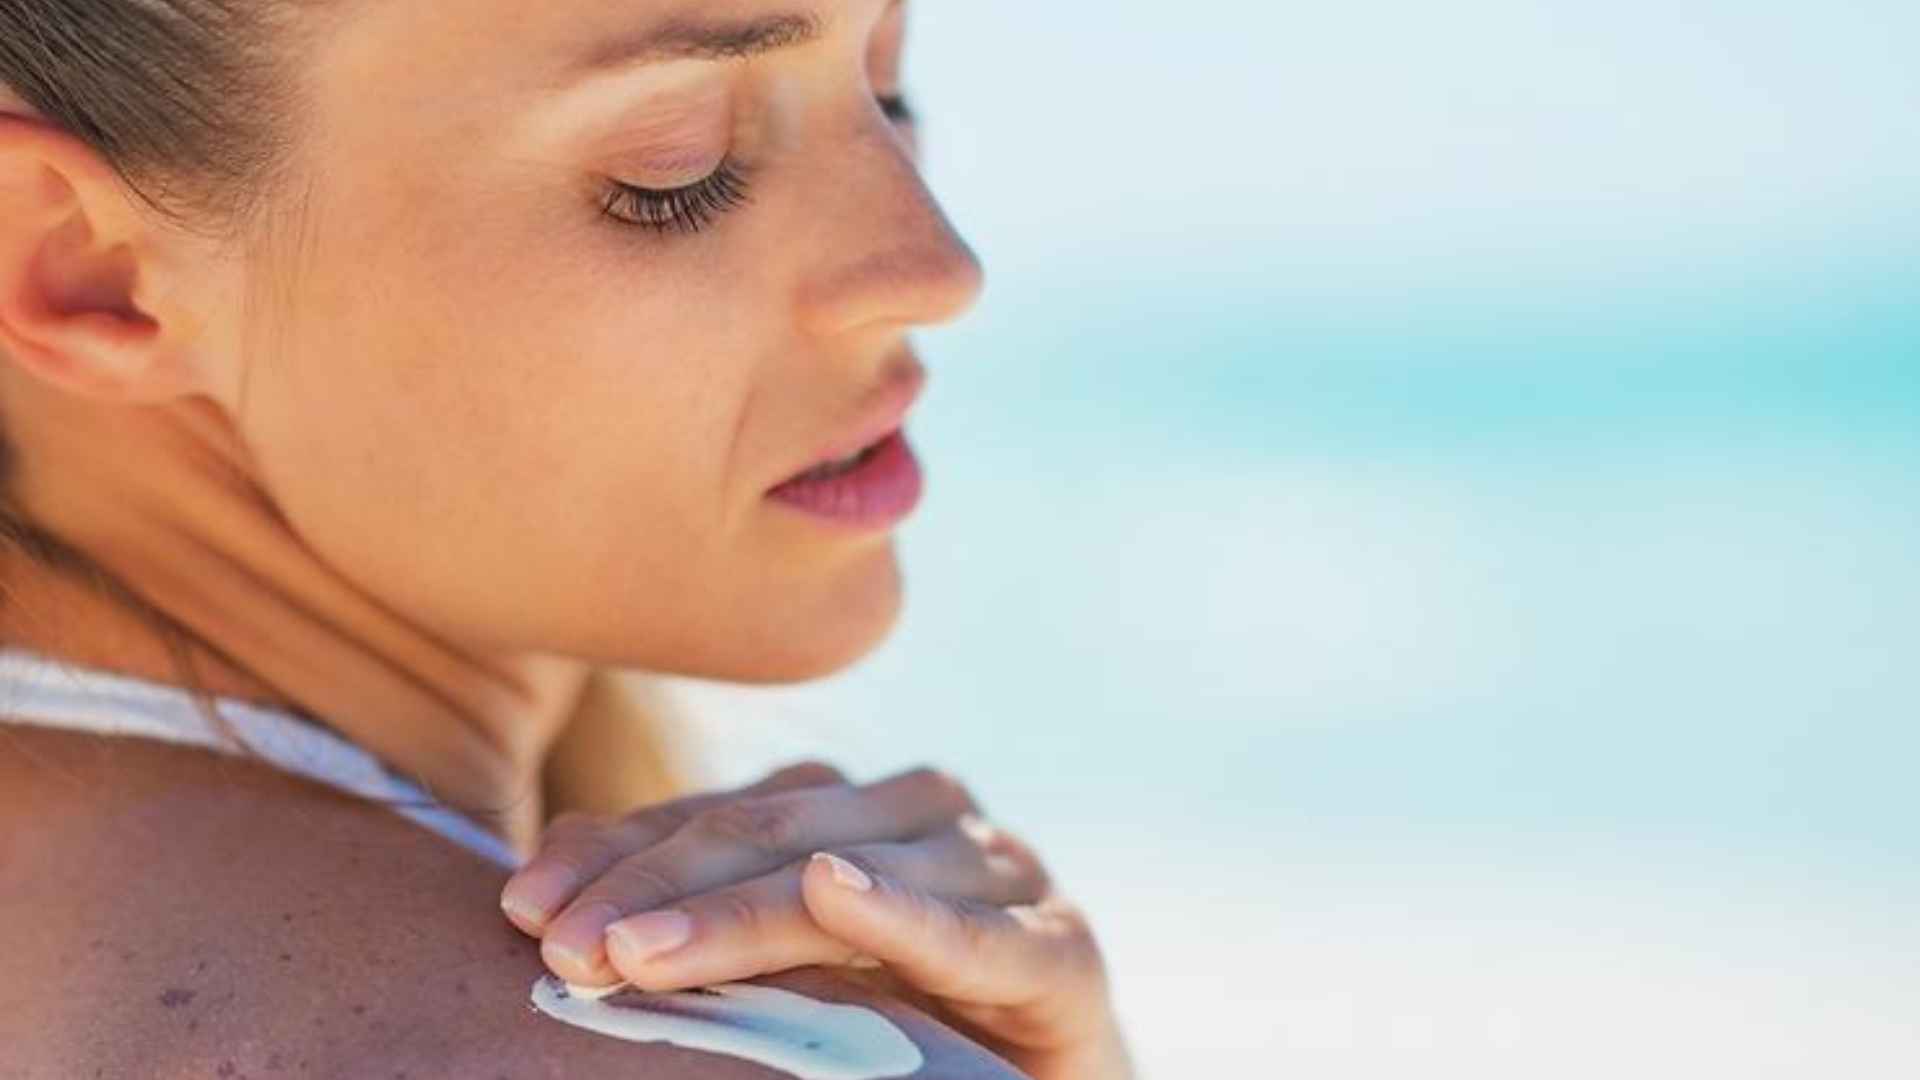 A woman applying sun lotion